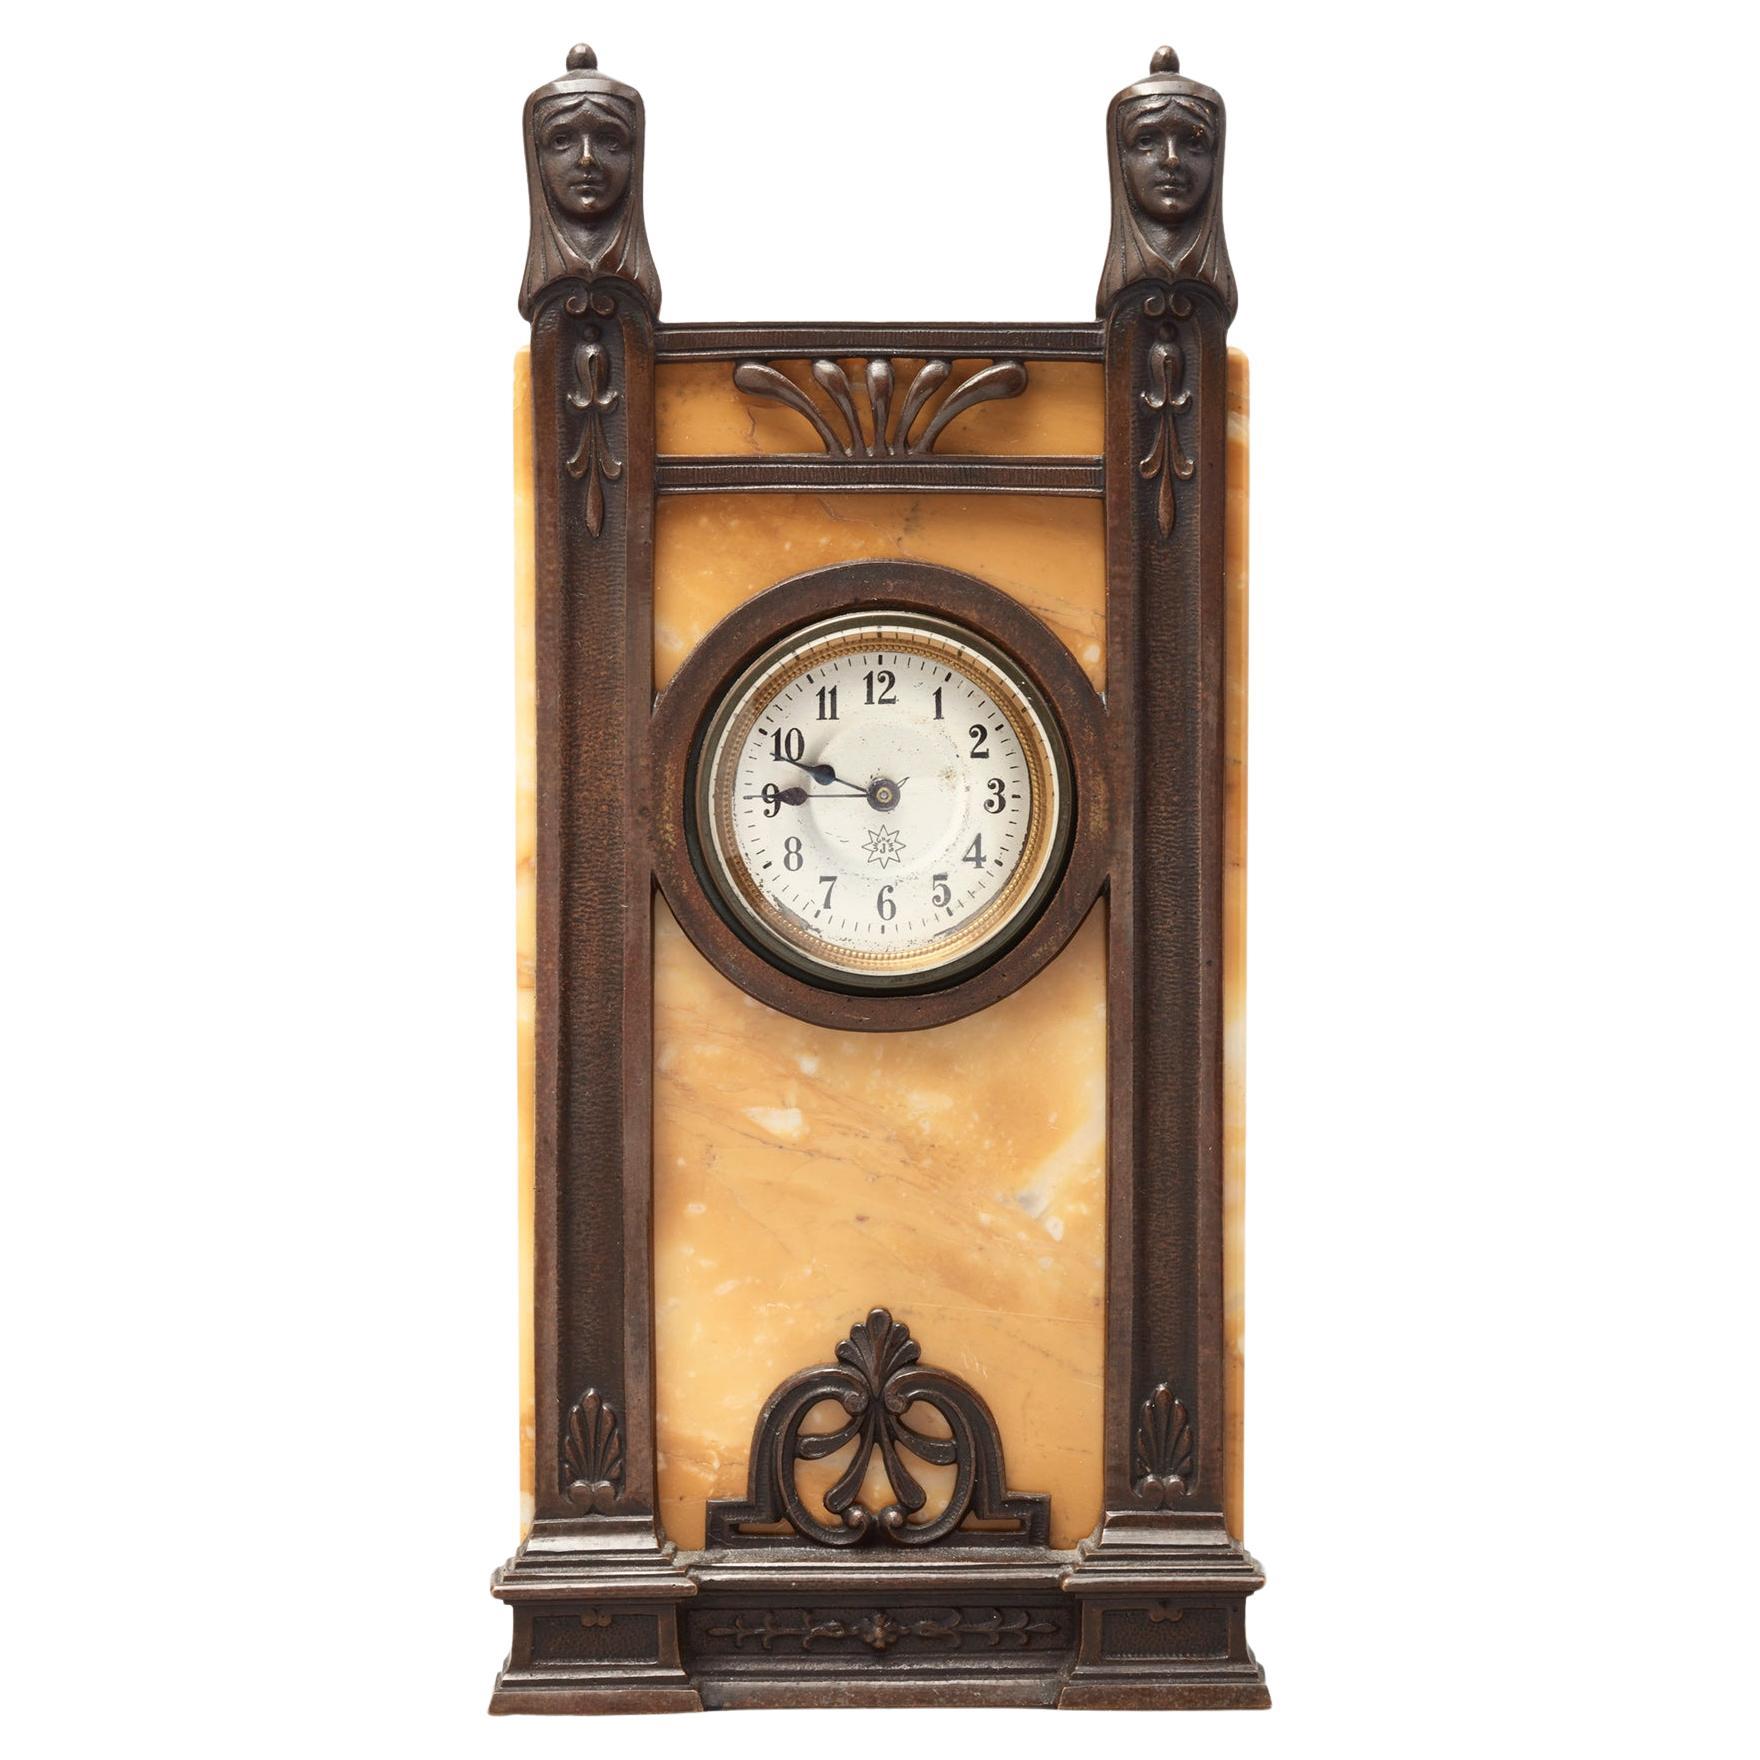 When were Junghans clocks made?